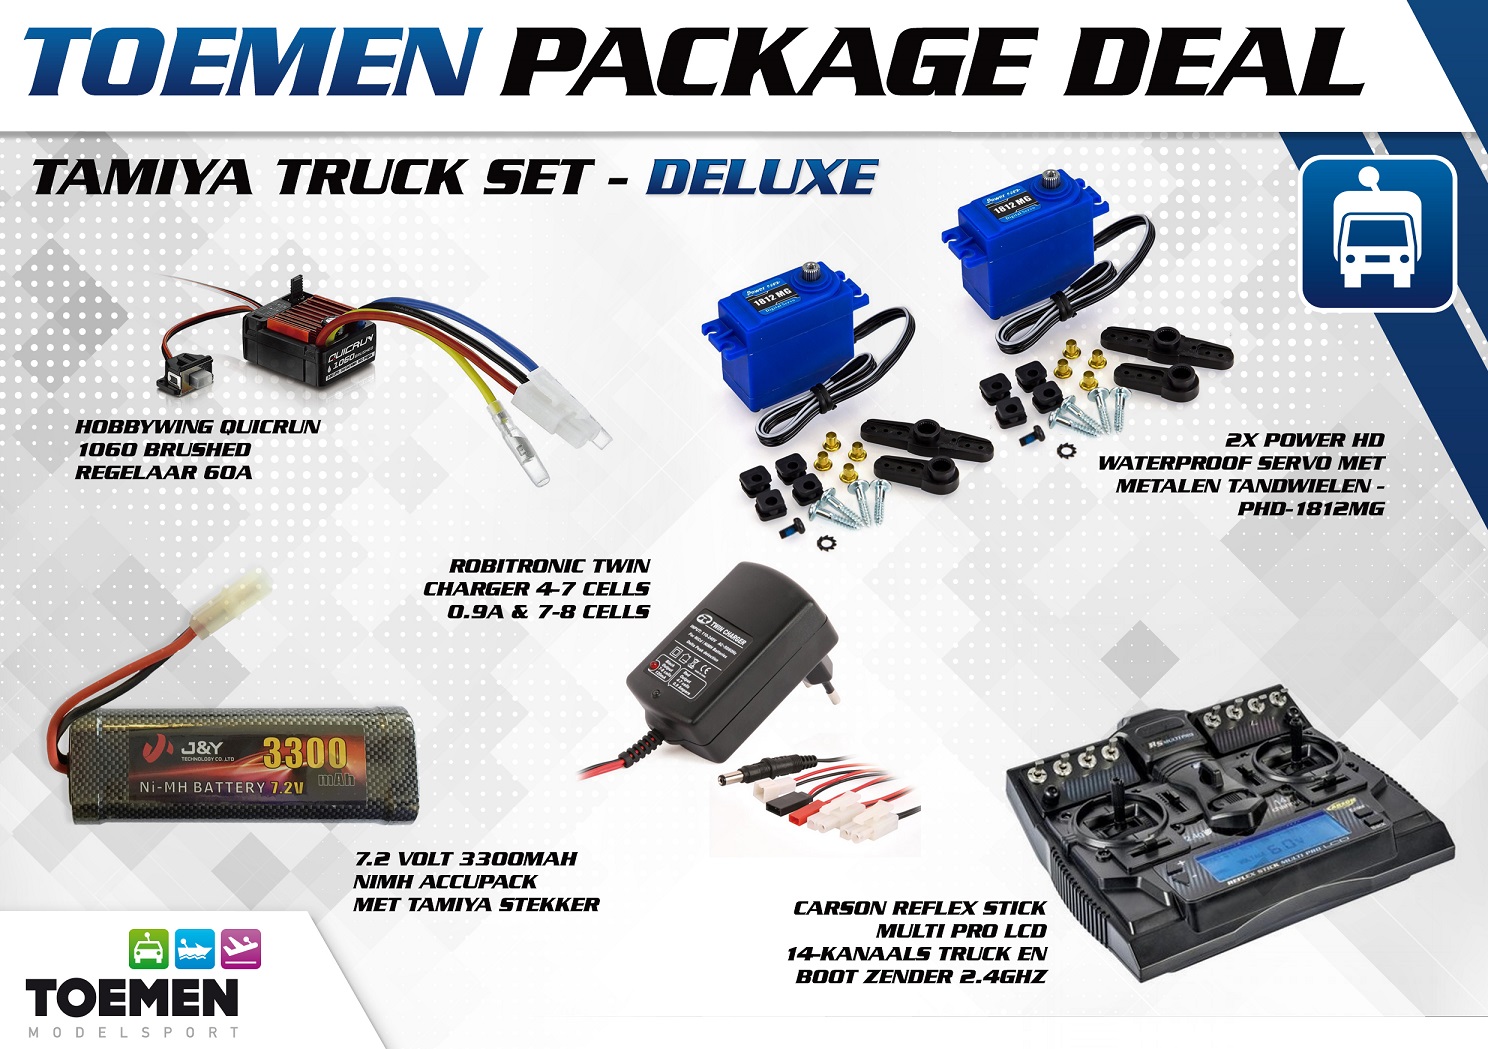 Toemen Package Deal Tamiya Truck Set - Deluxe